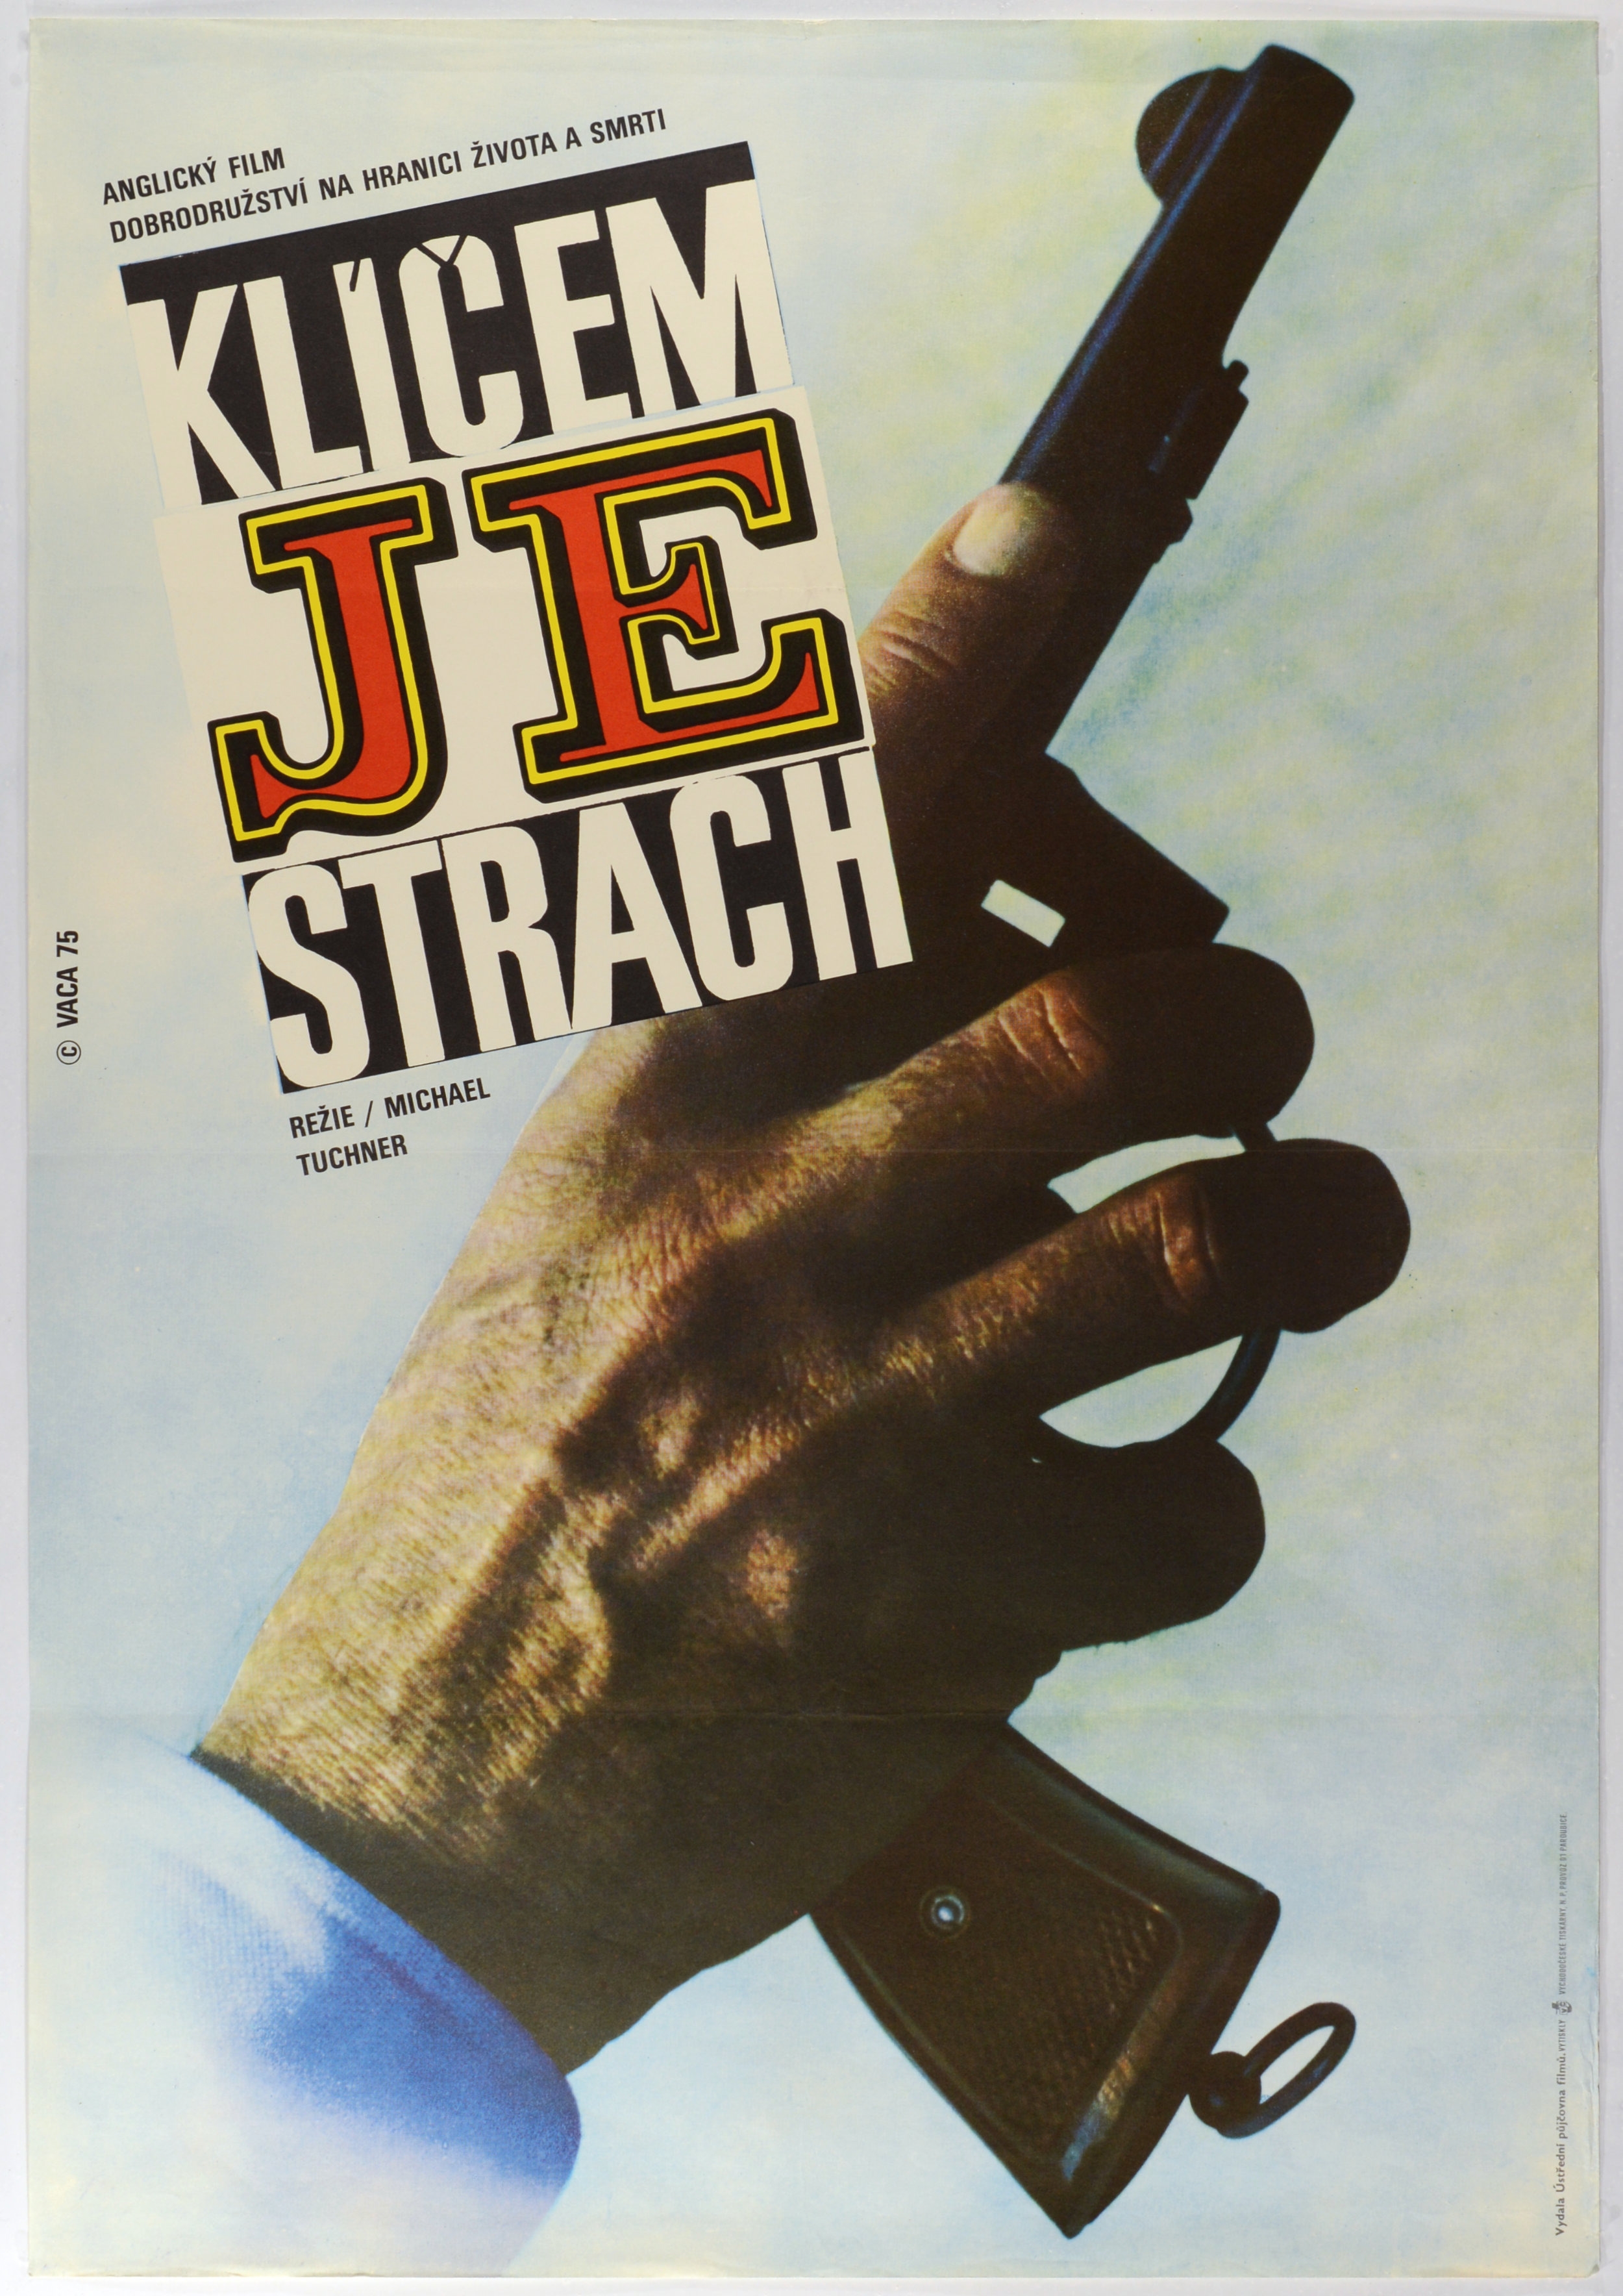 KLÍČEM JE STRACH (FEAR IS THE KEY) by Karel Vaca, 1975